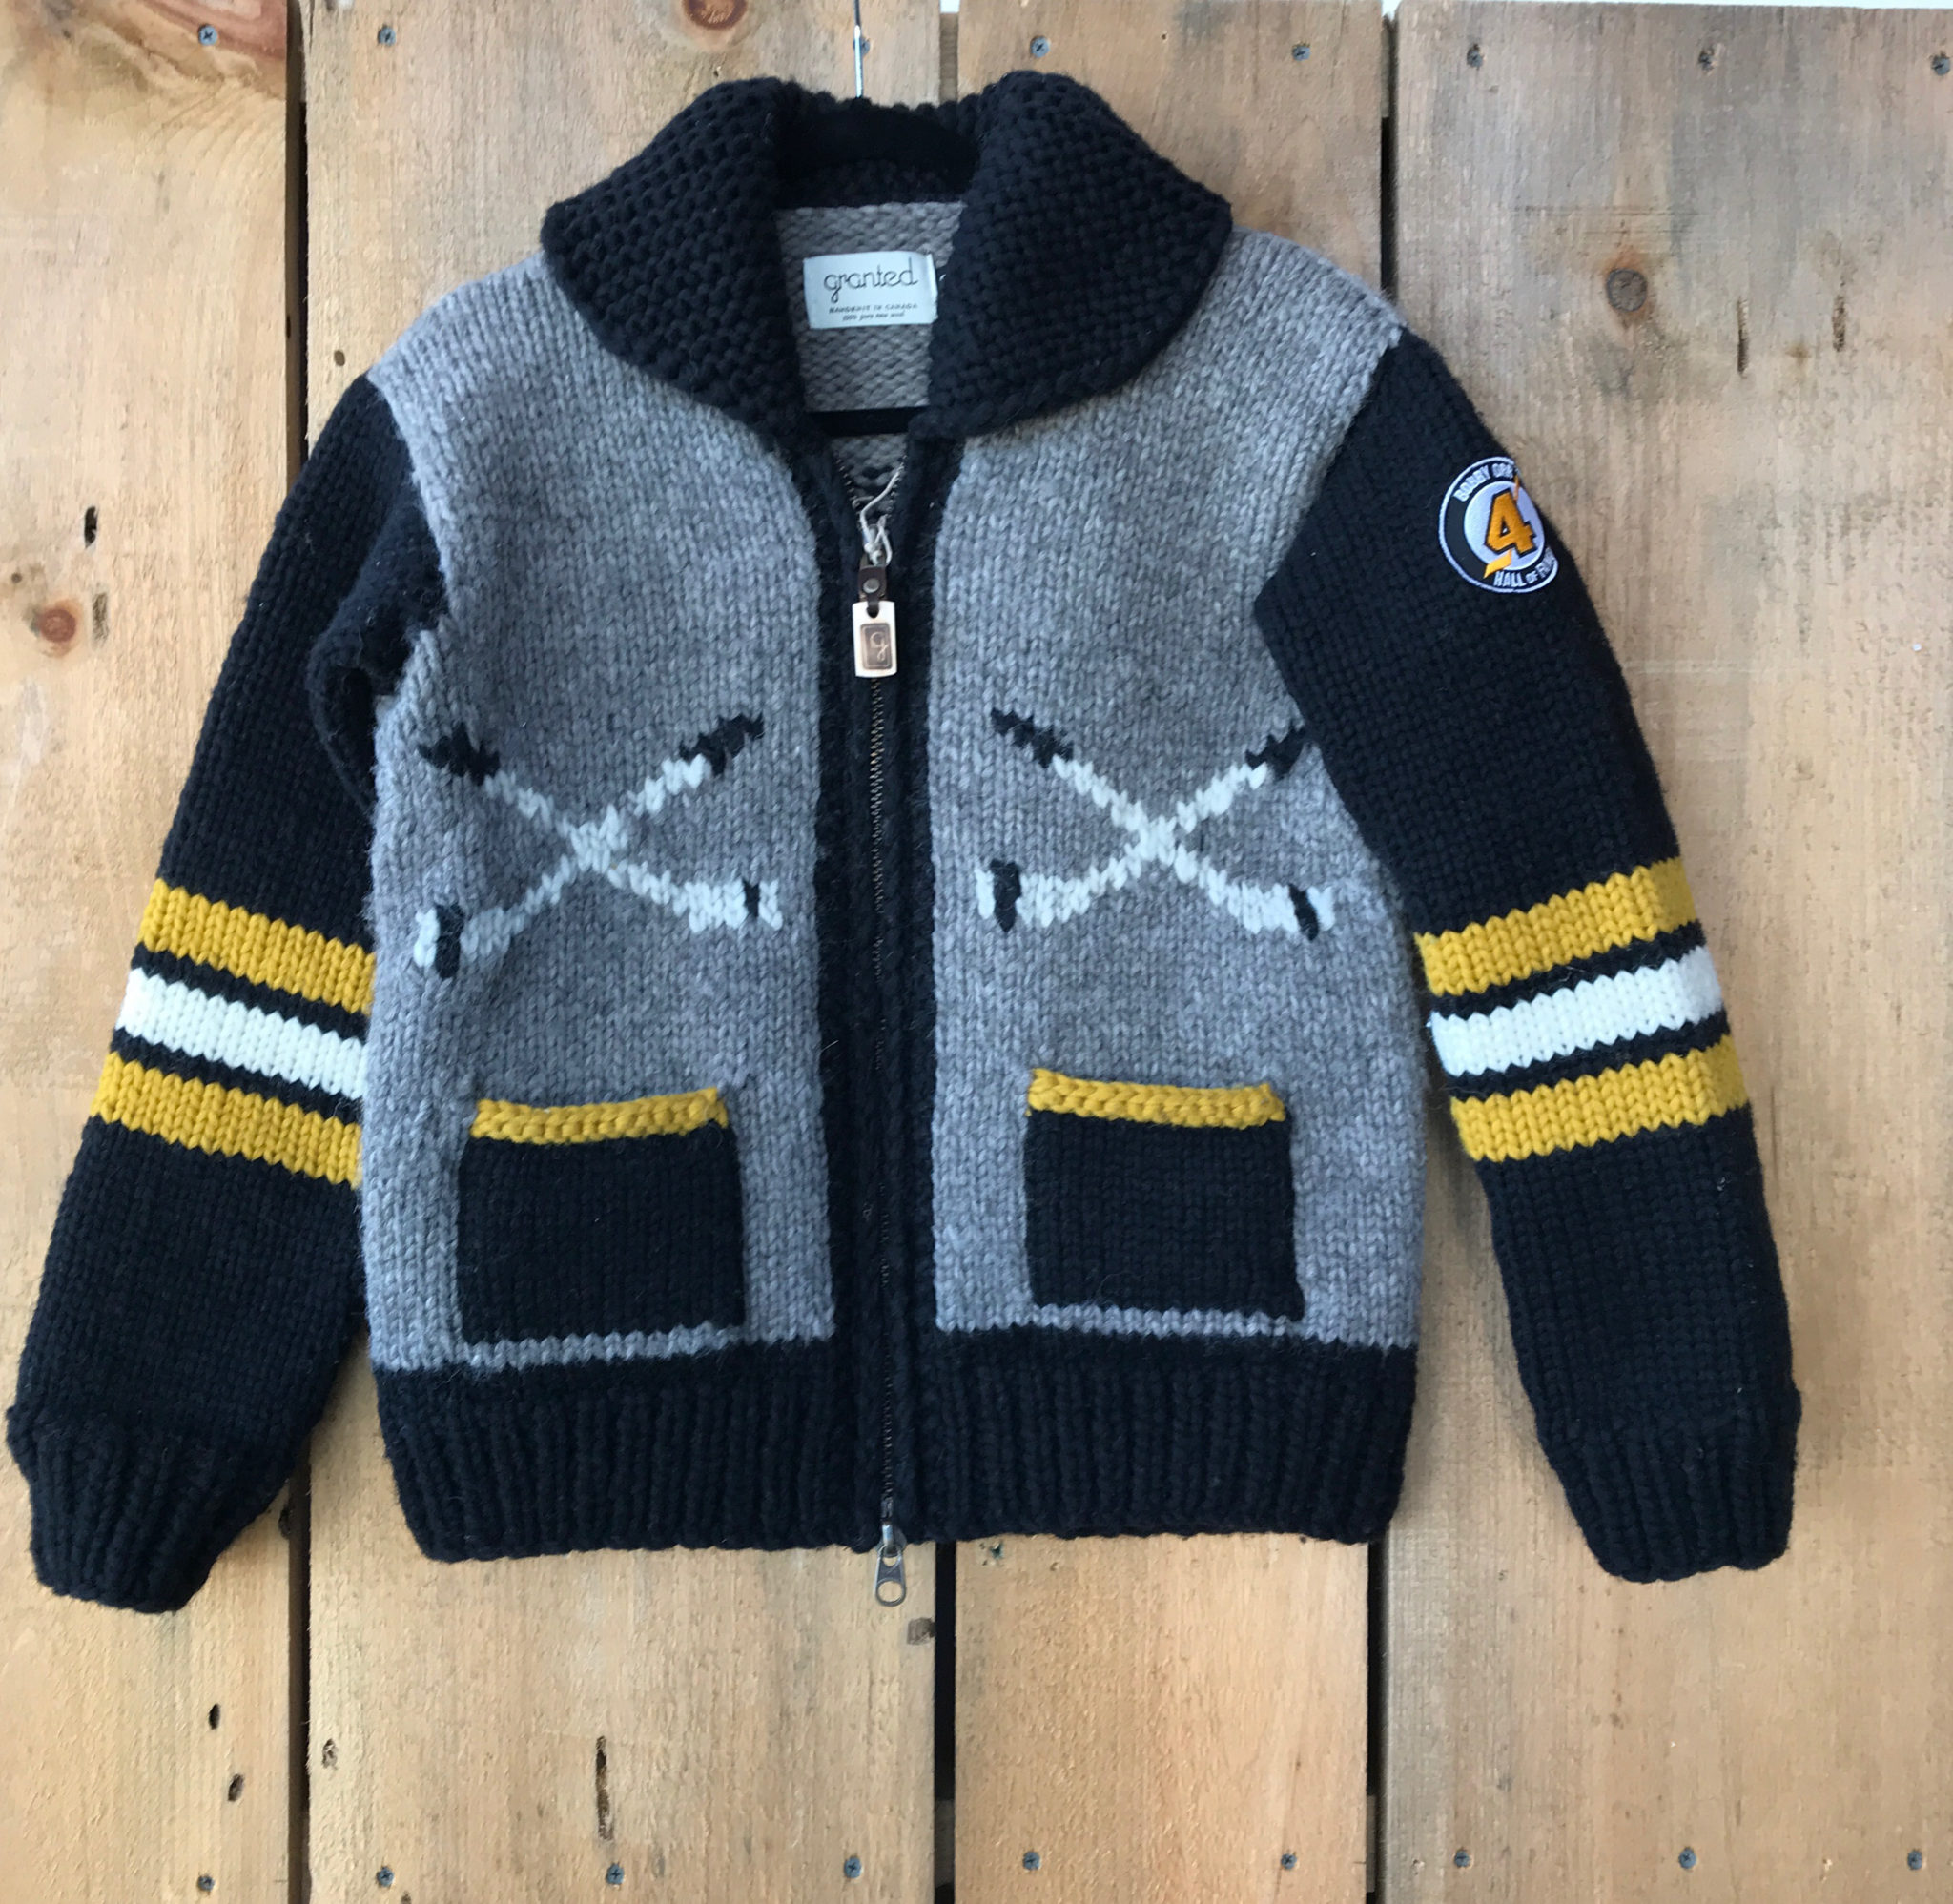 Custom Knit Sweater, Design & Order online